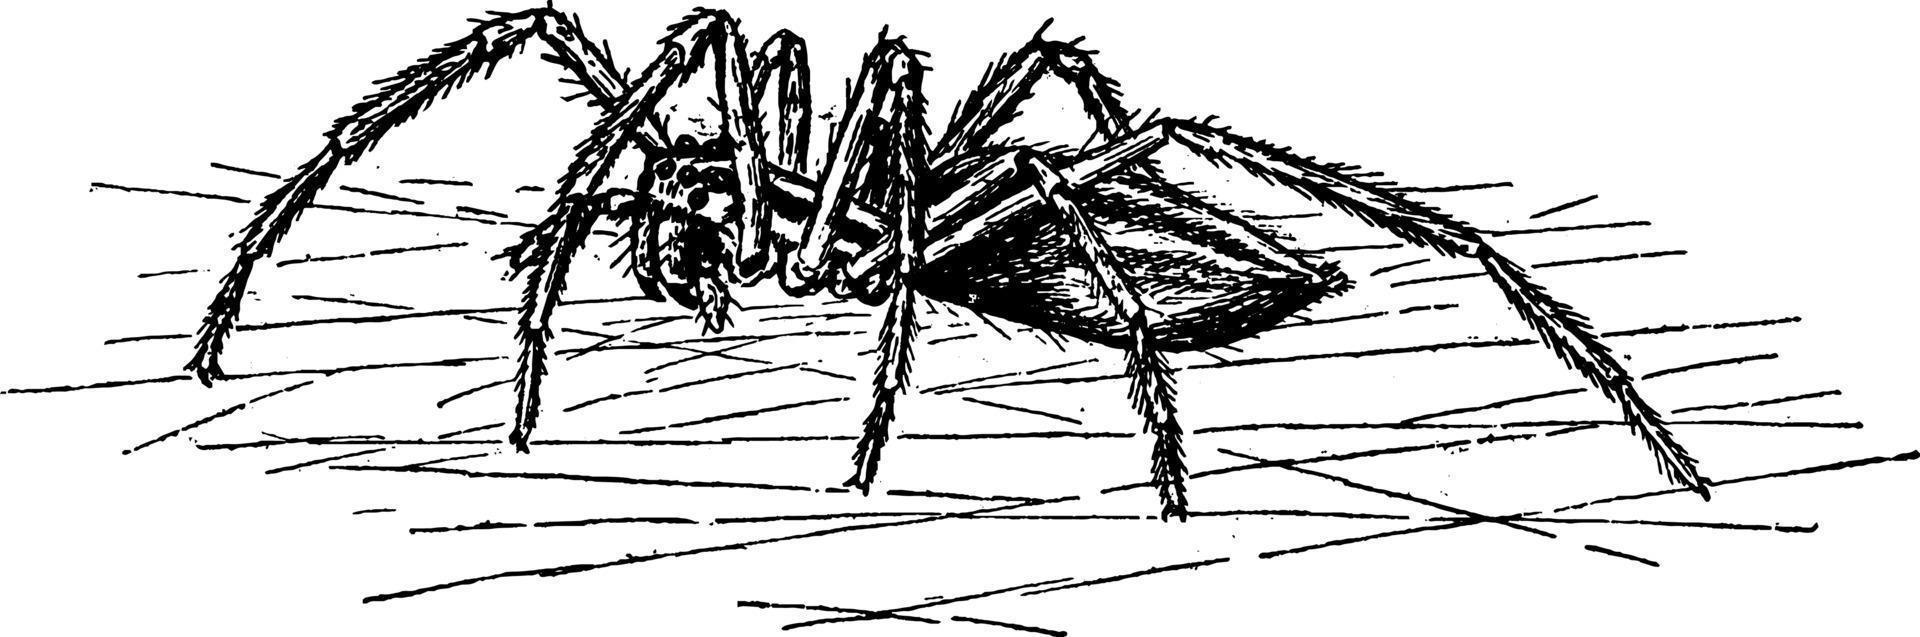 araña o araneae, ilustración vintage vector